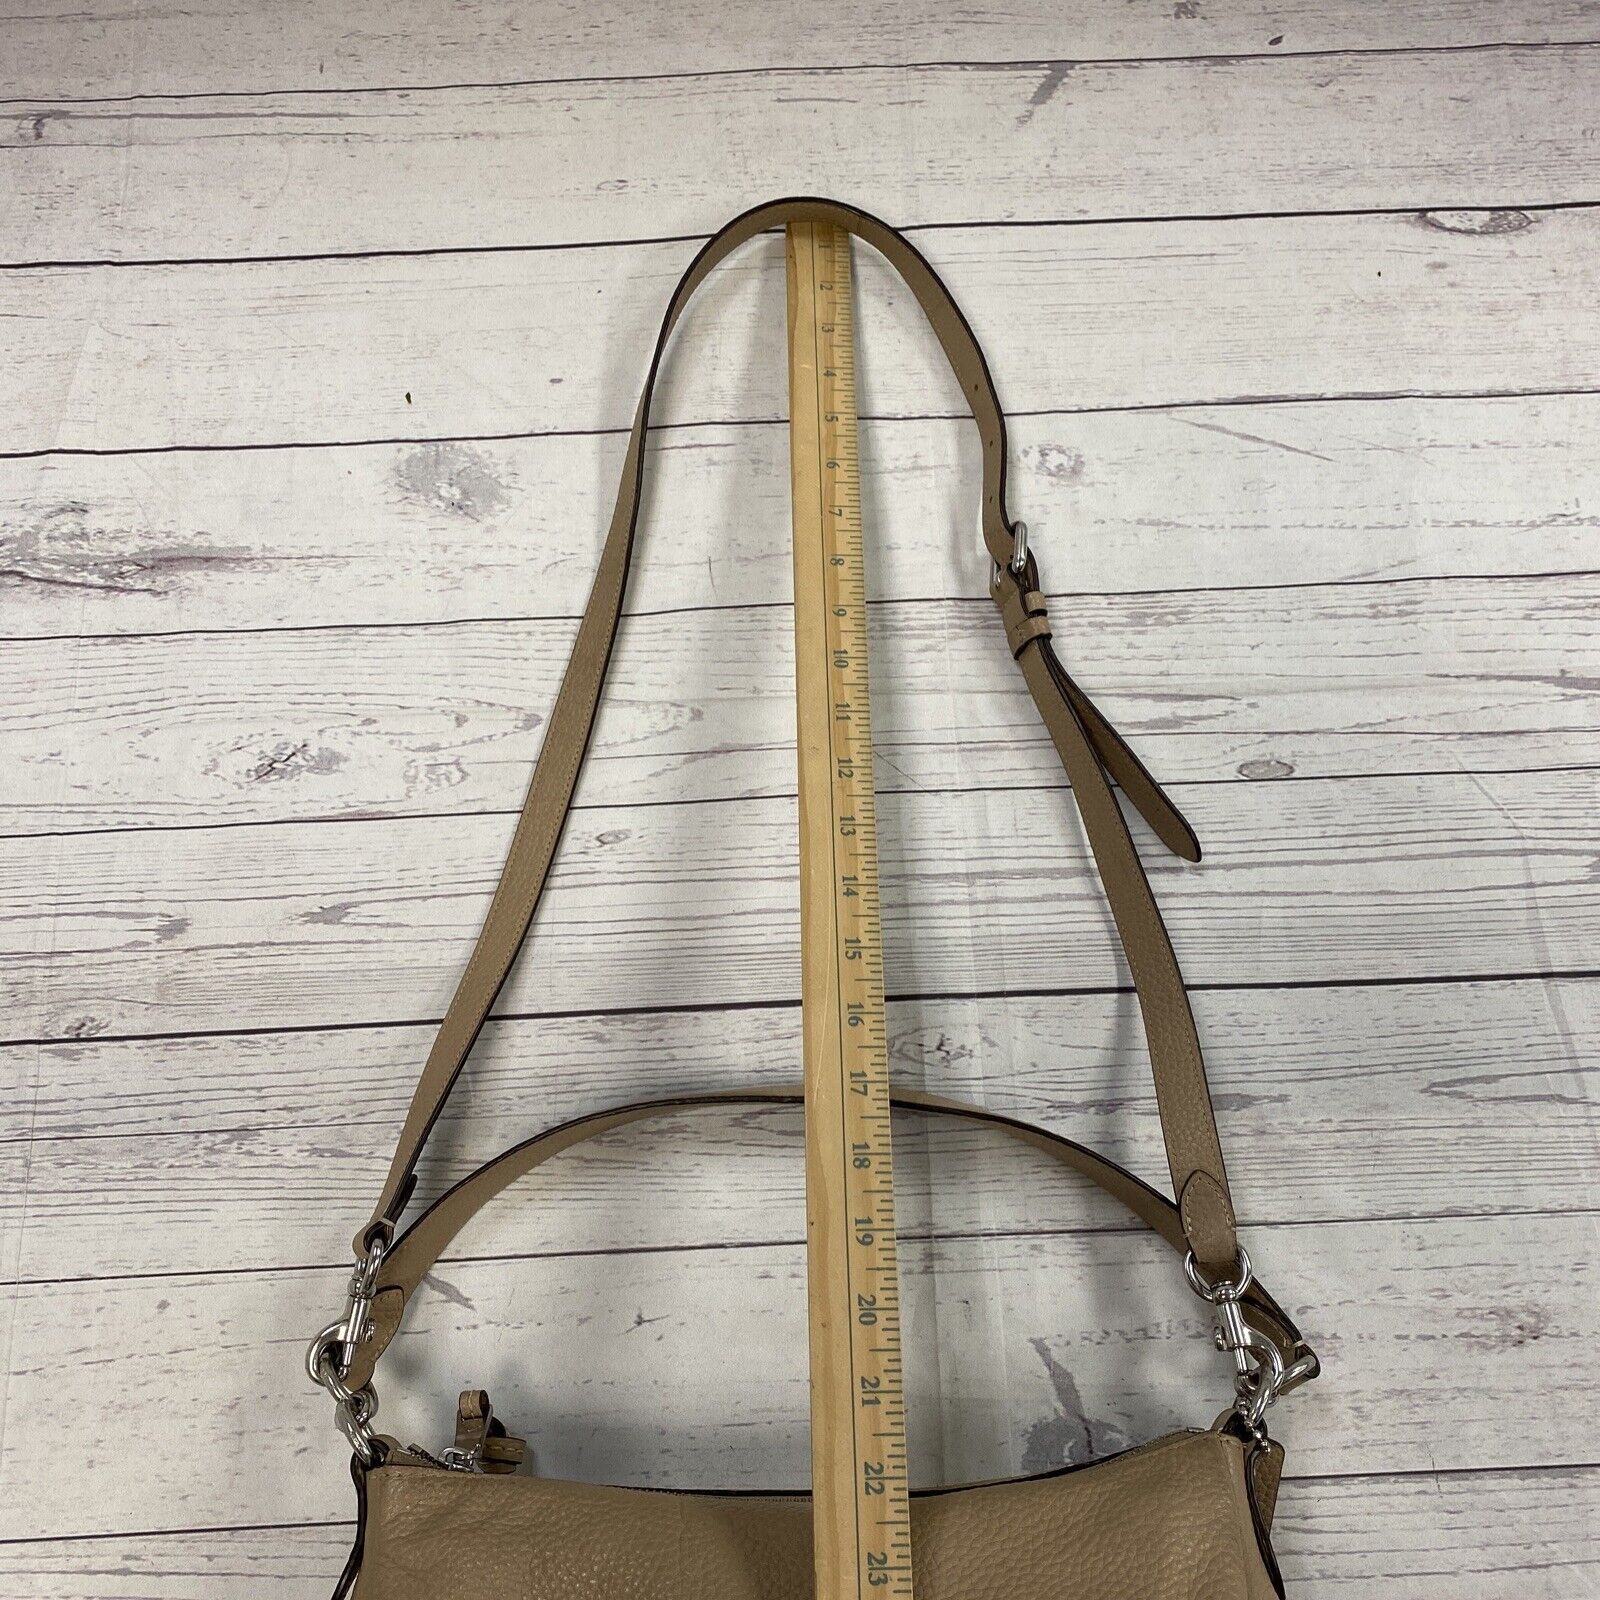 Buy Coach Signature Leather Rowan Medium Satchel Handbag Bag Purse Saddle  Brown at Amazon.in